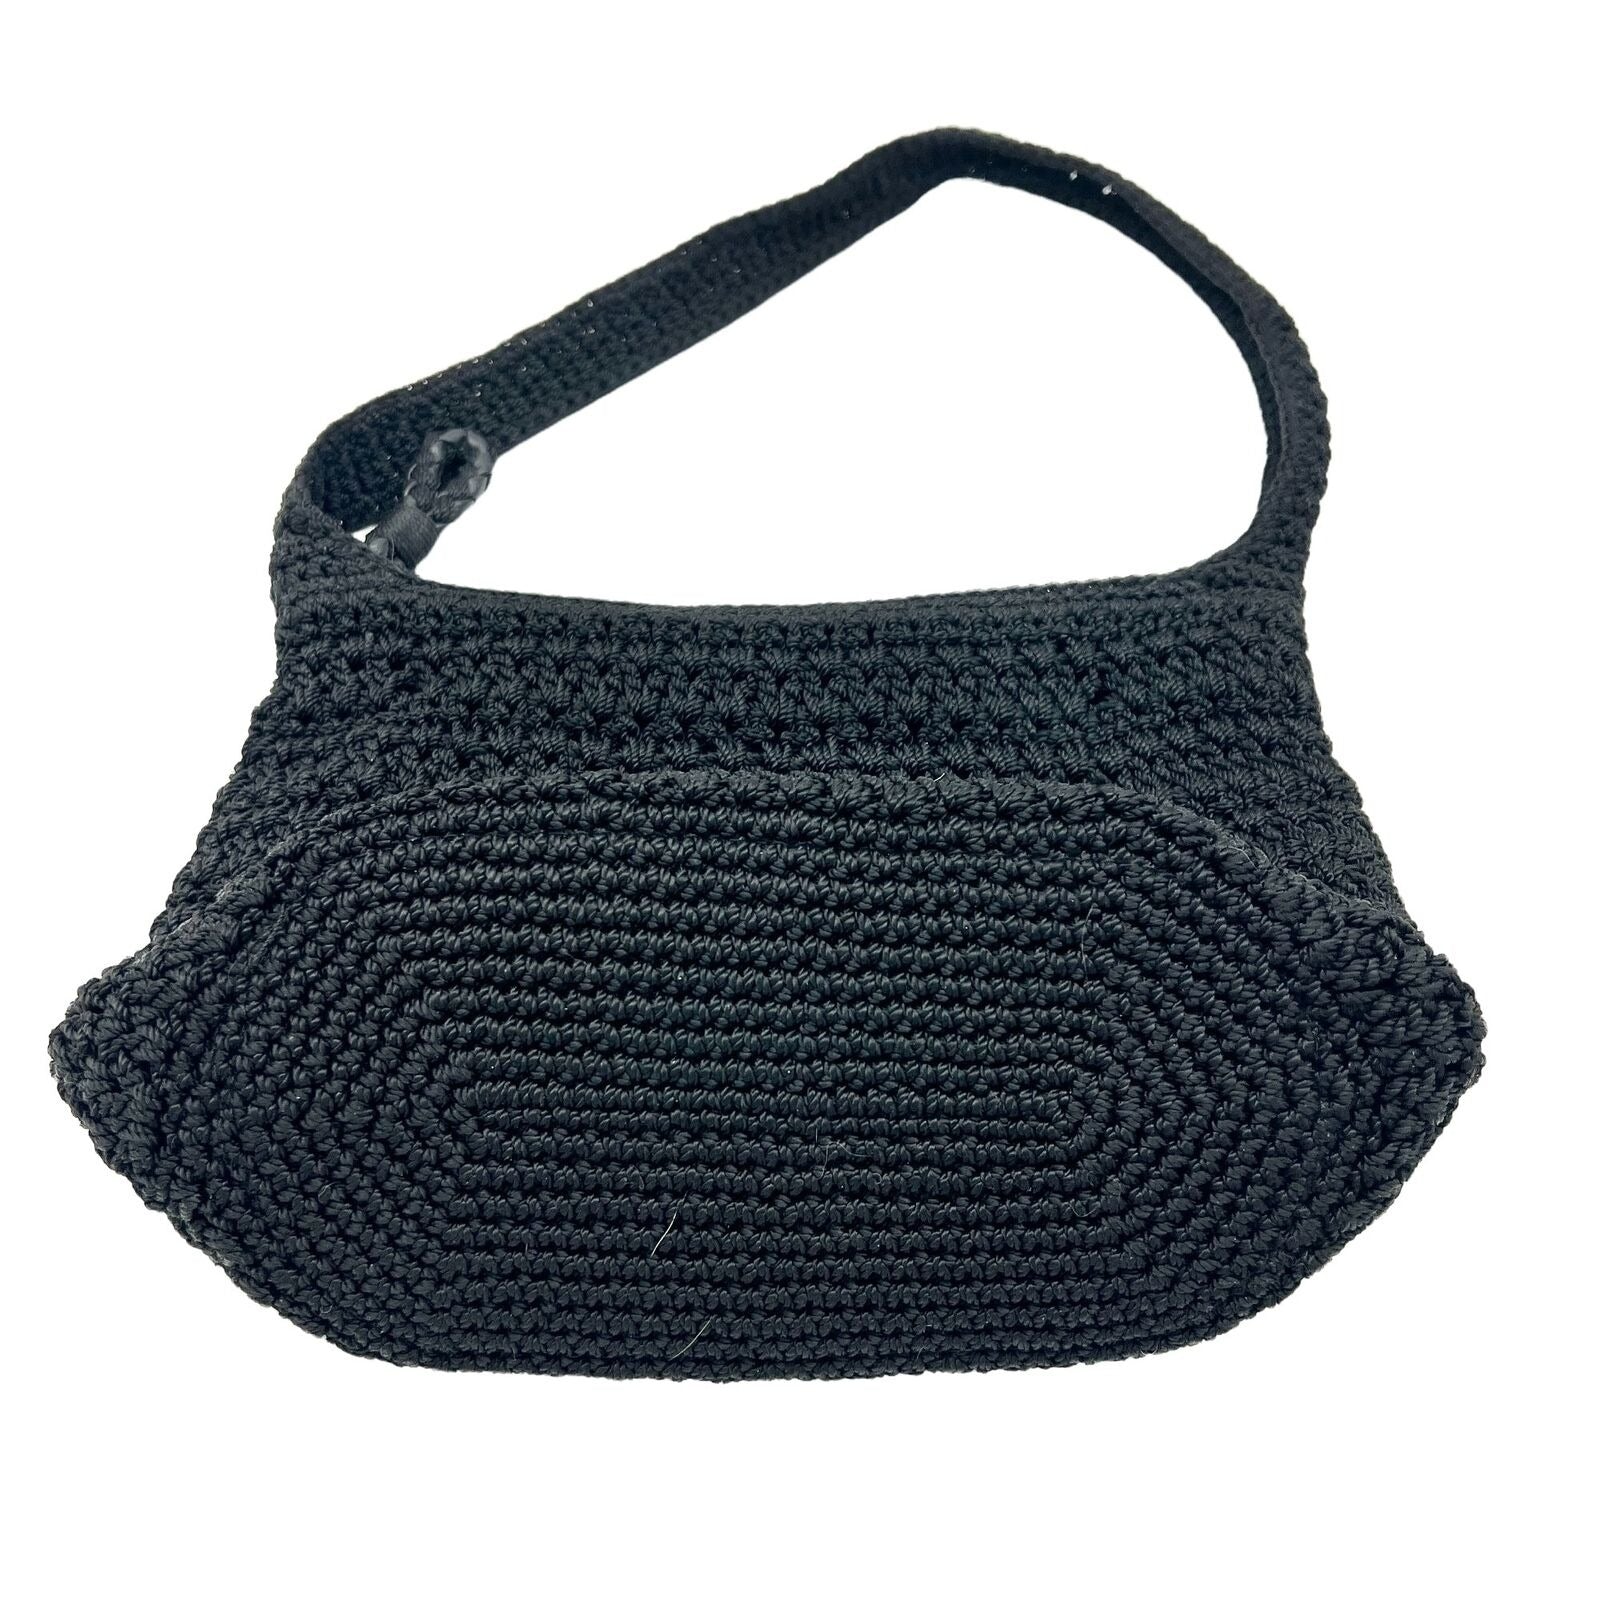 The Sak Crochet Bags | suturasonline.com.br